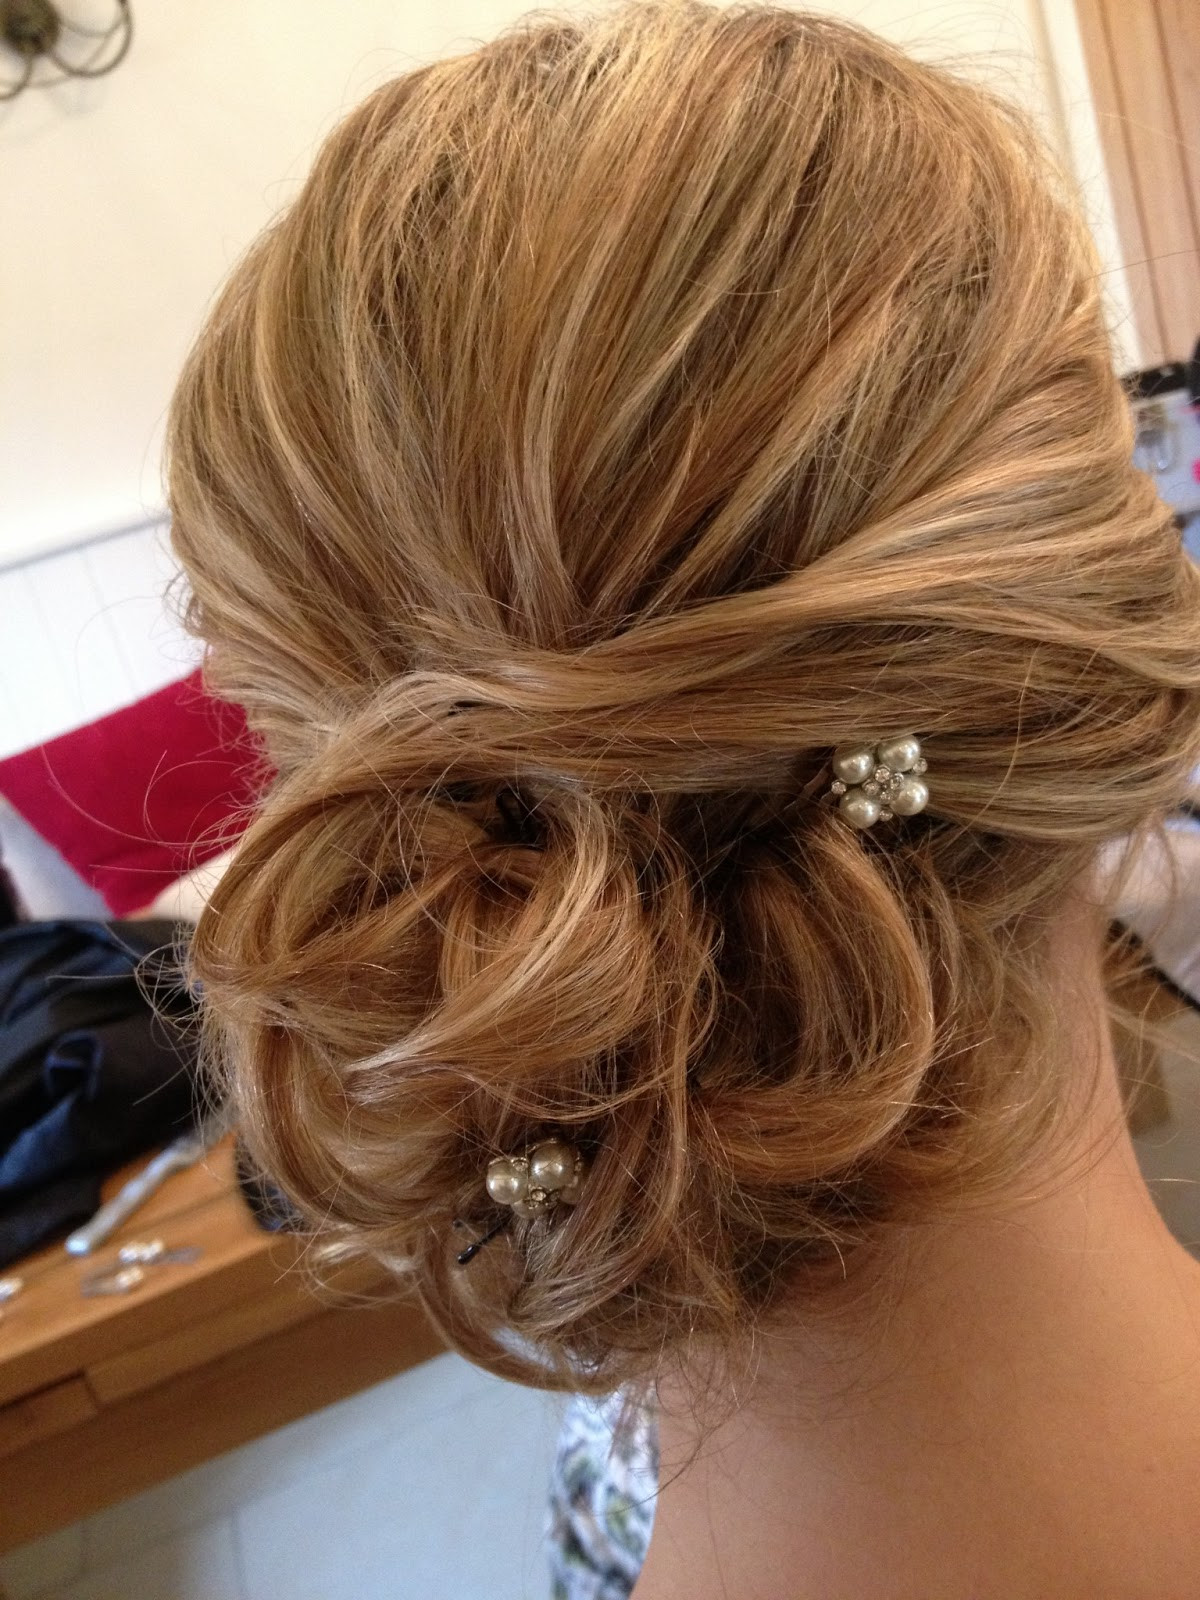 Wedding Hairstyles Buns
 Kingscote Barn Wedding Hair Styling for Frances